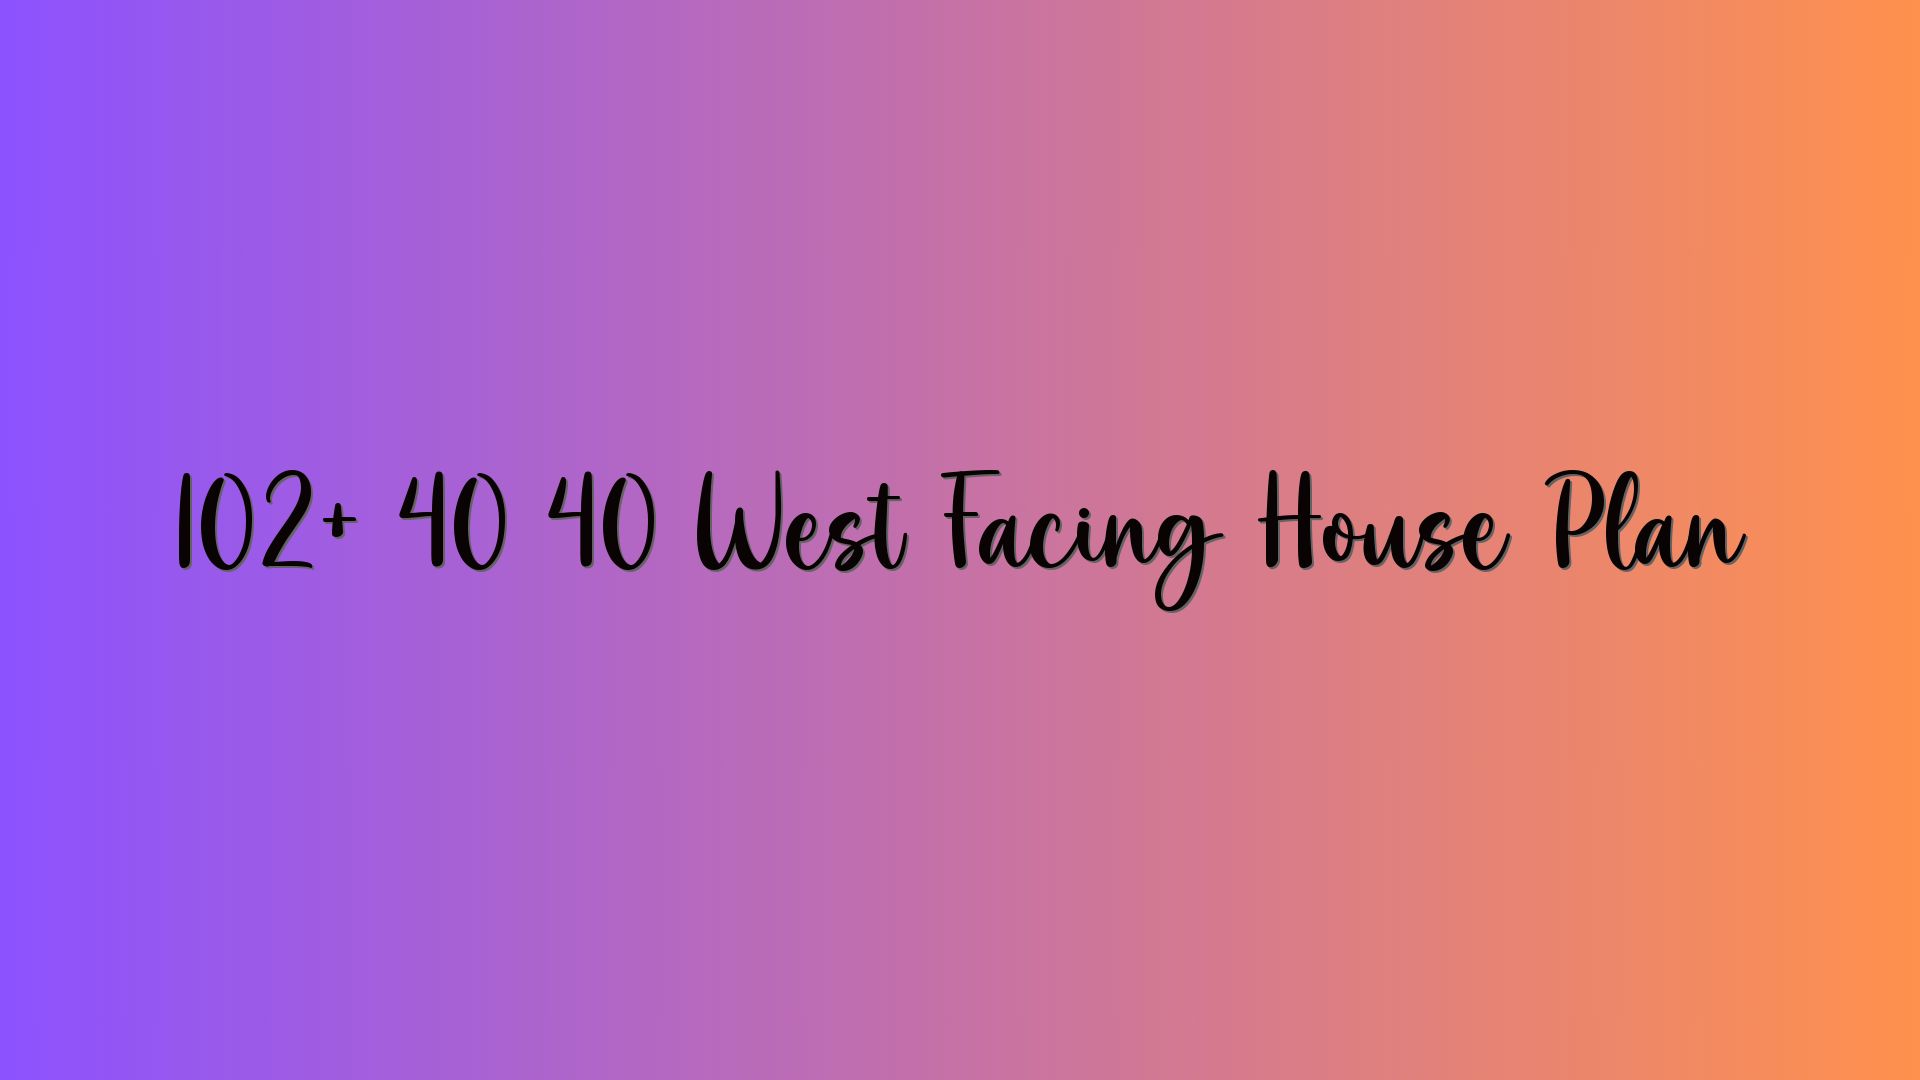 102+ 40 40 West Facing House Plan